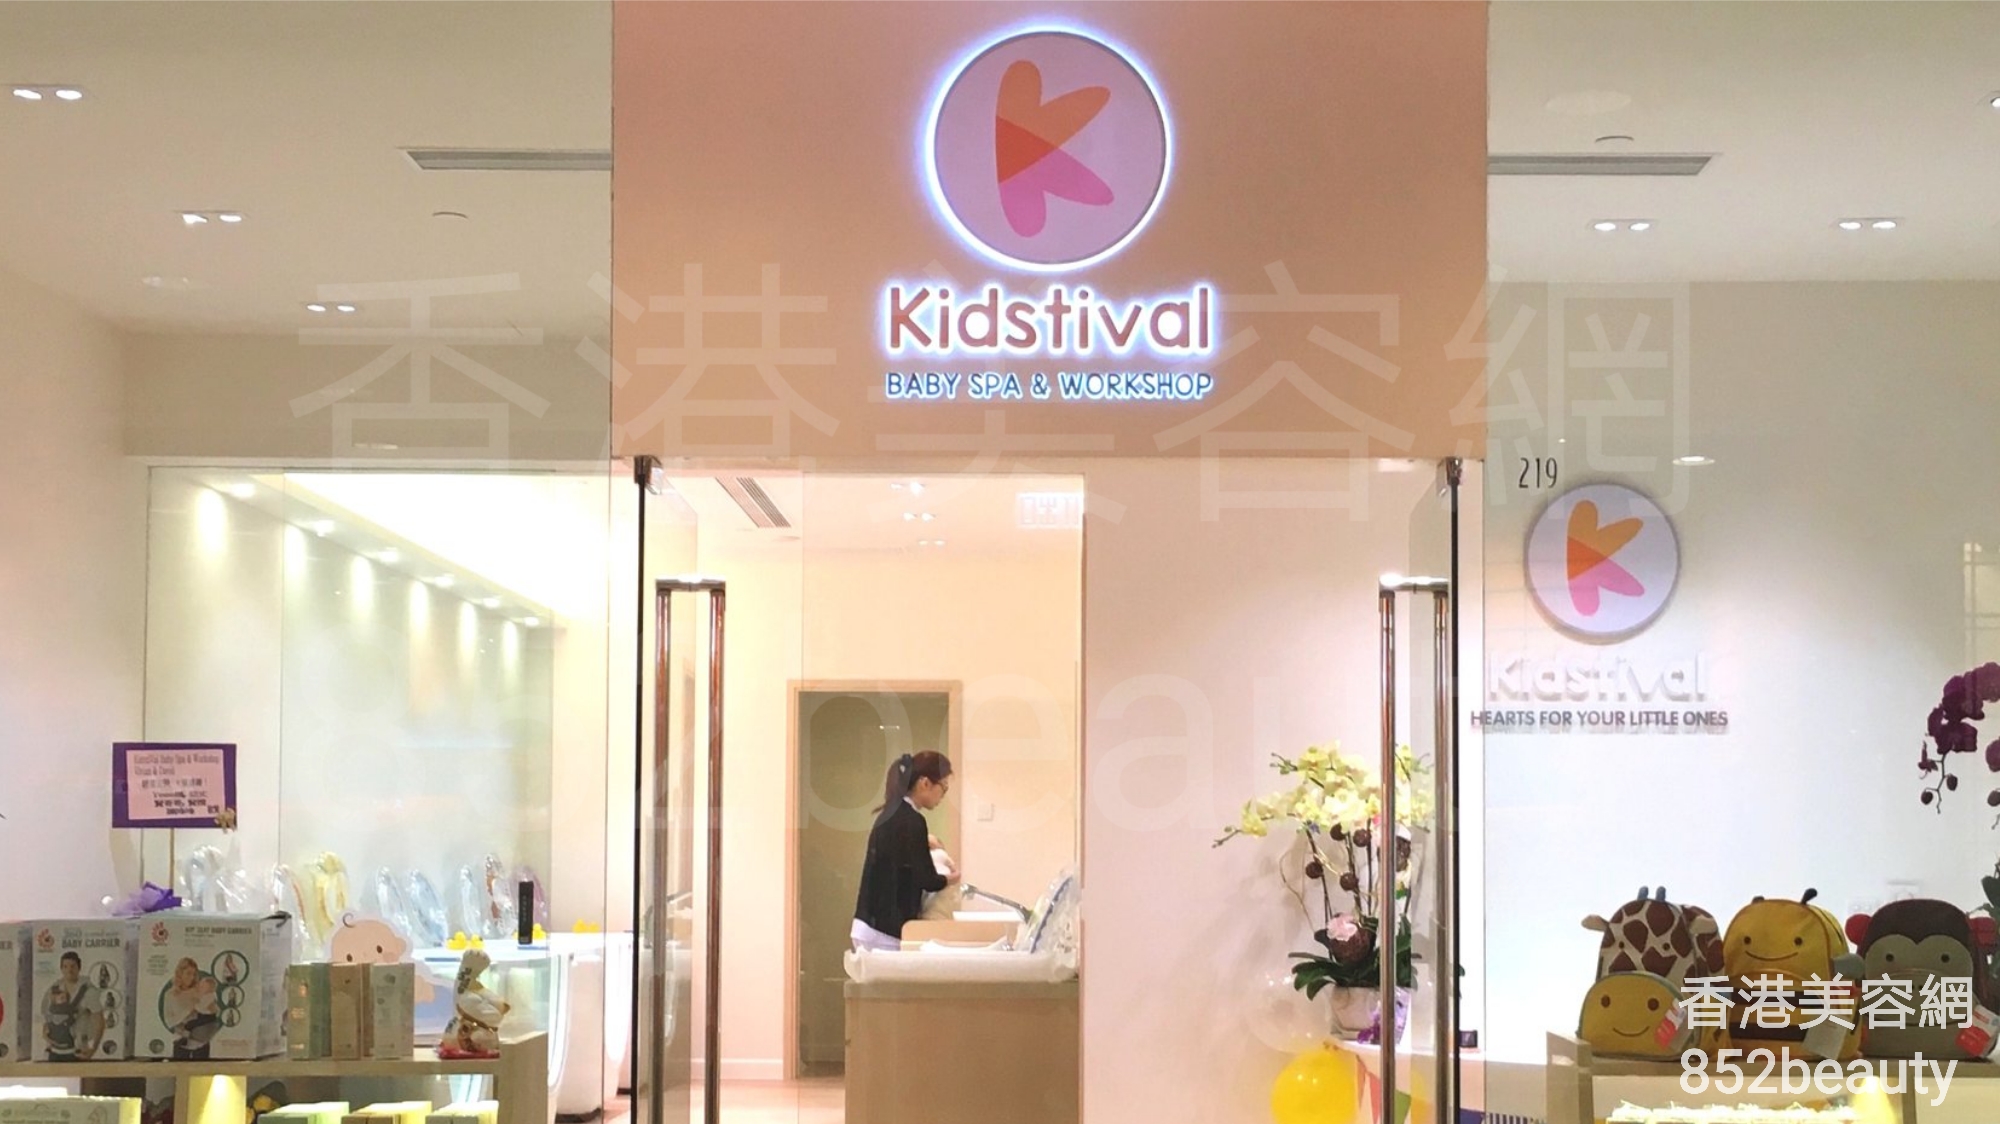 香港美容網 Hong Kong Beauty Salon 美容院 / 美容師: Kidstival Baby Spa & Workshop